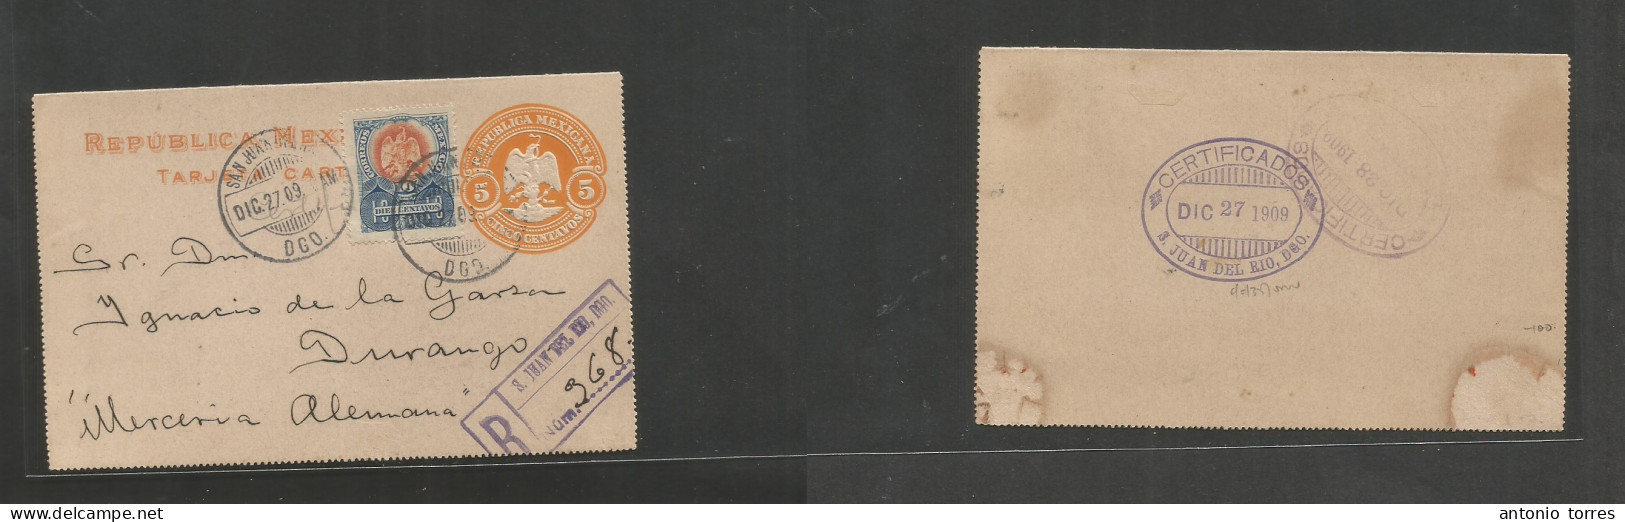 Mexico - Stationery. 1909 (27 Dic) San Juan Del Rio - Durango (28 Dic) Registered 5c Orange Stat Lettersheet + 10c Adtl, - Mexique